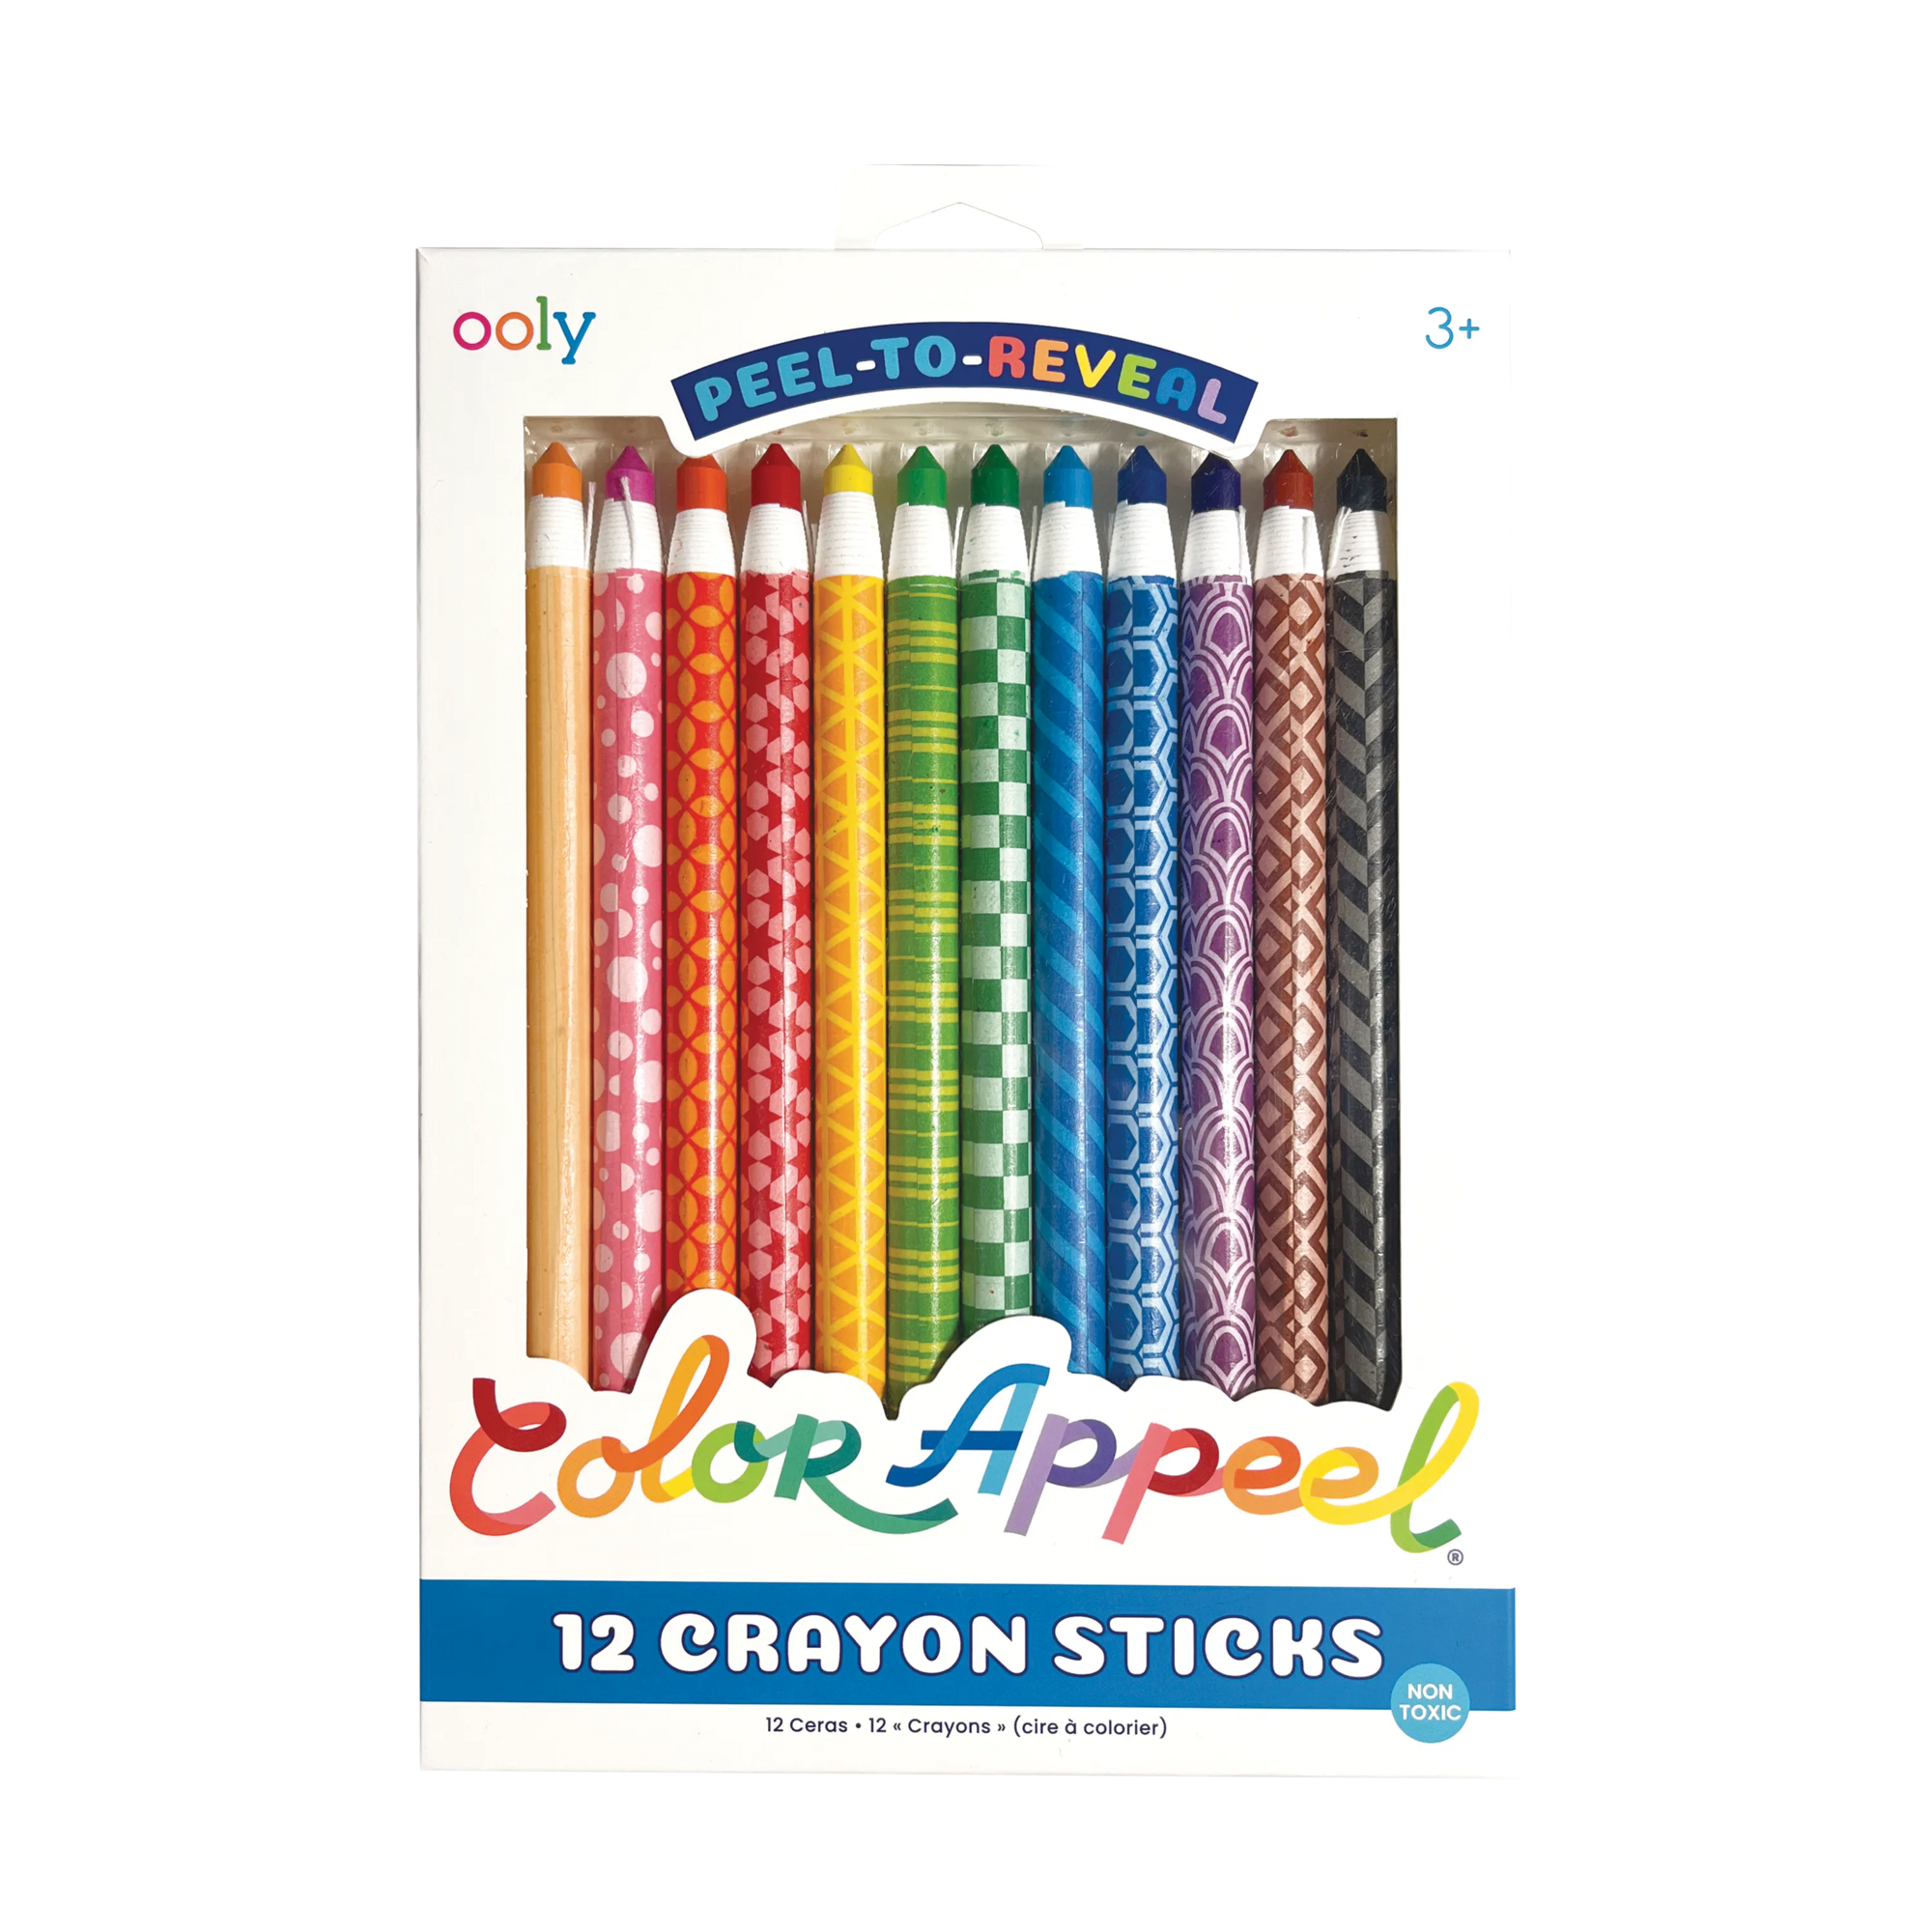 Color Appeel Crayon Sticks - Set of 12 packaging front